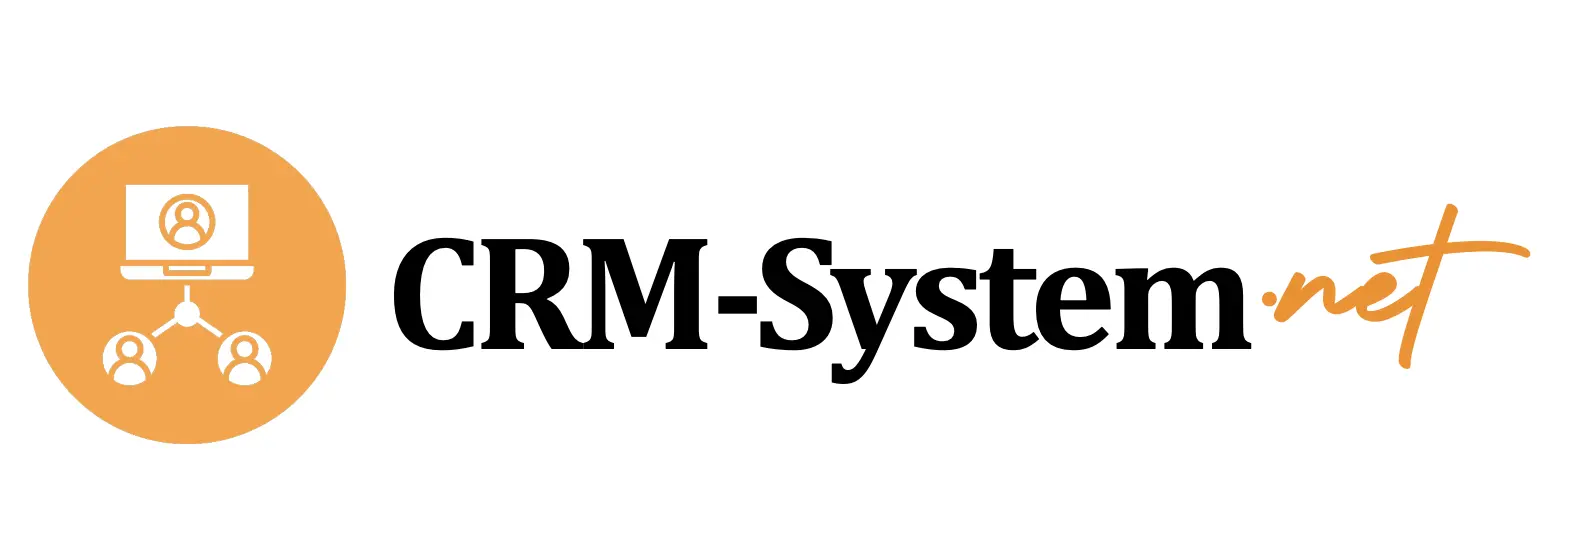 CRM-System.net